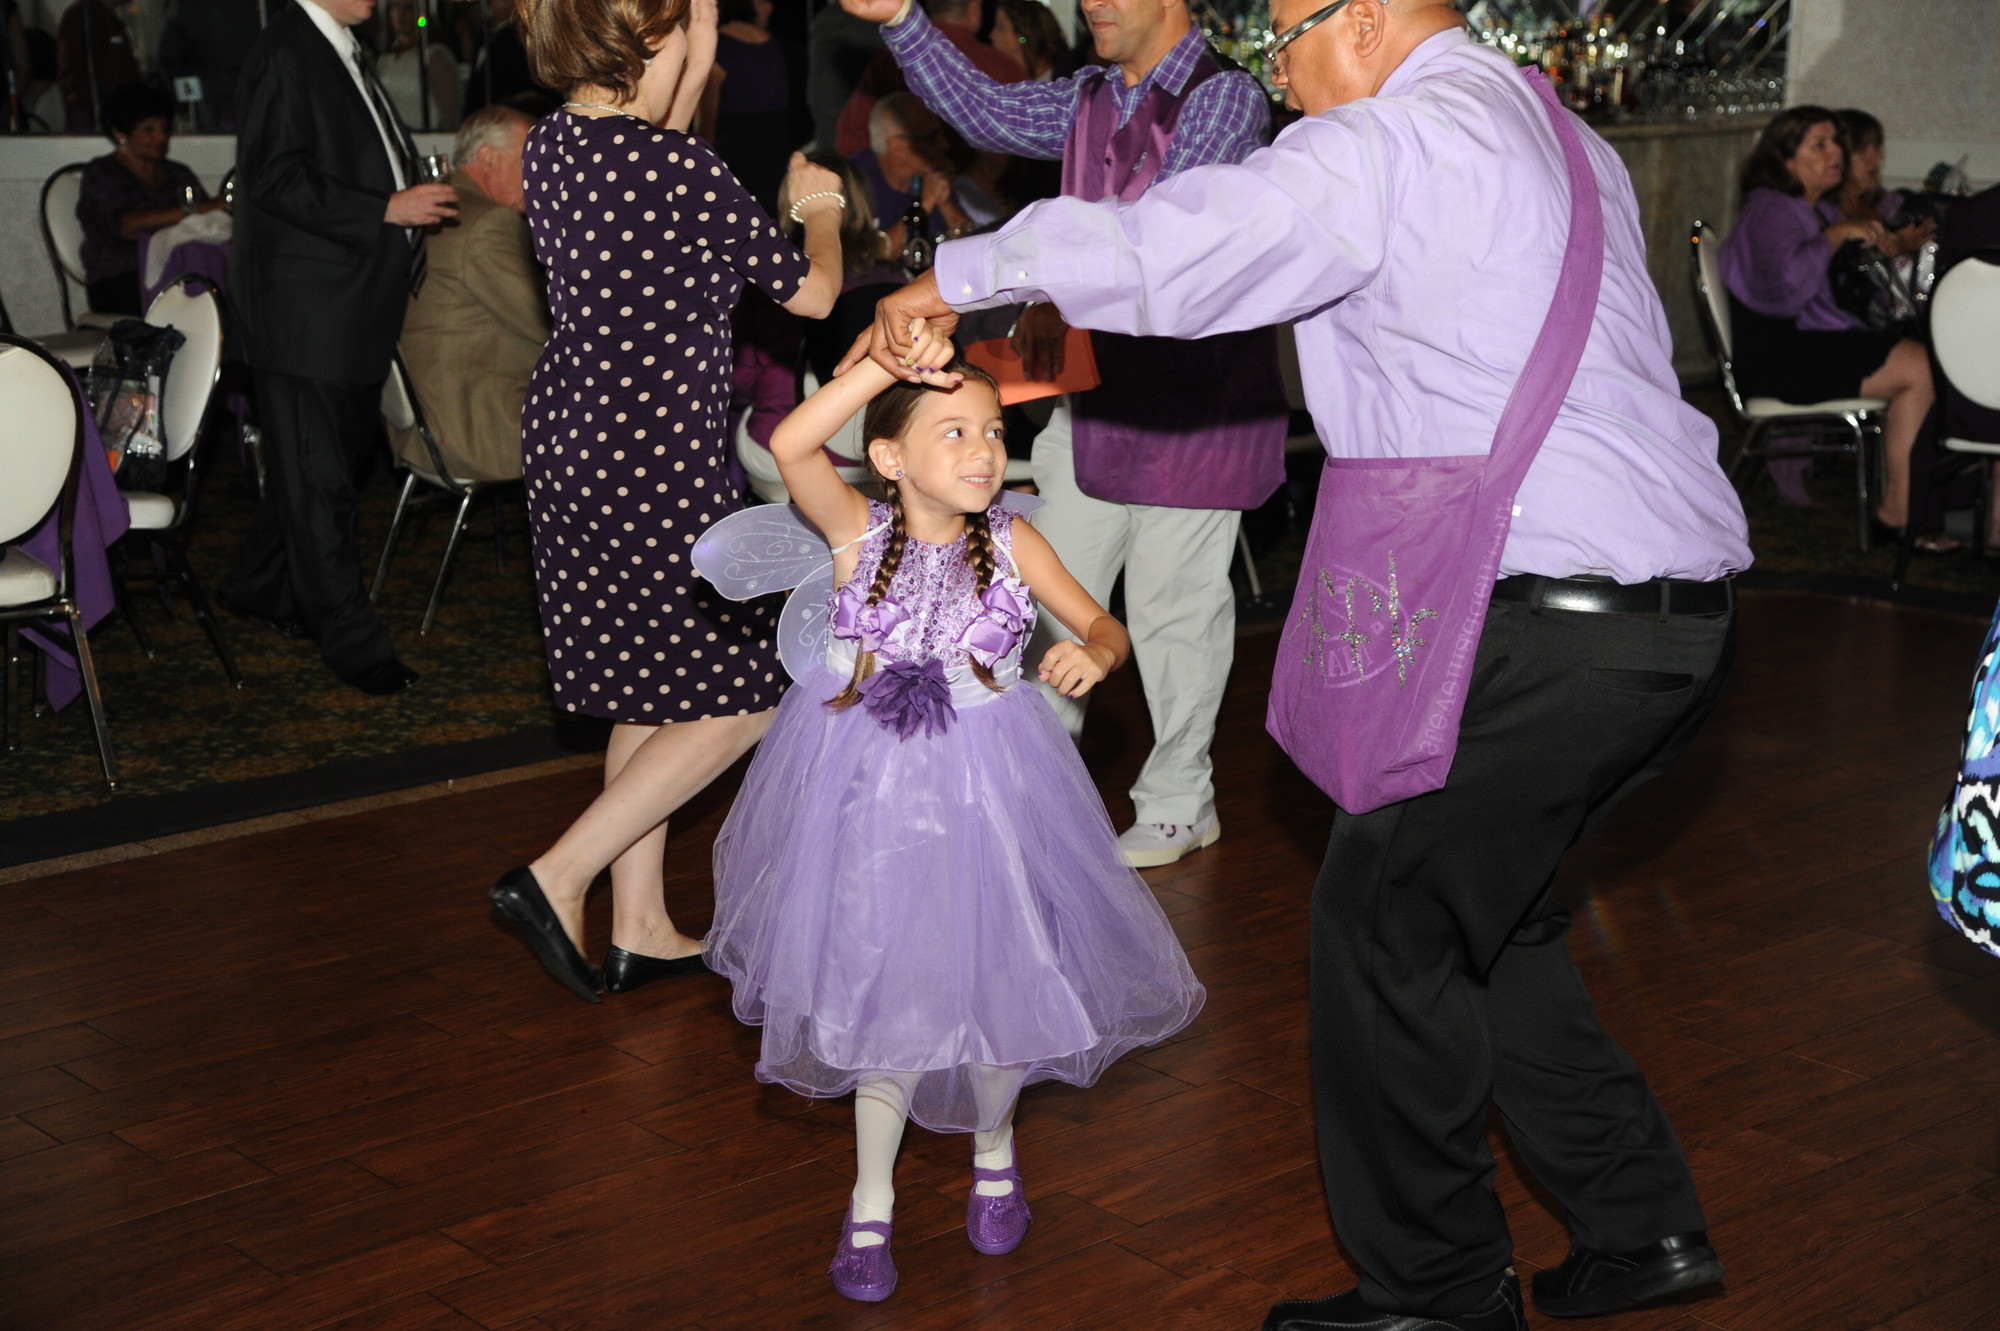 Olivia Miserandino dances with Keith Harrison